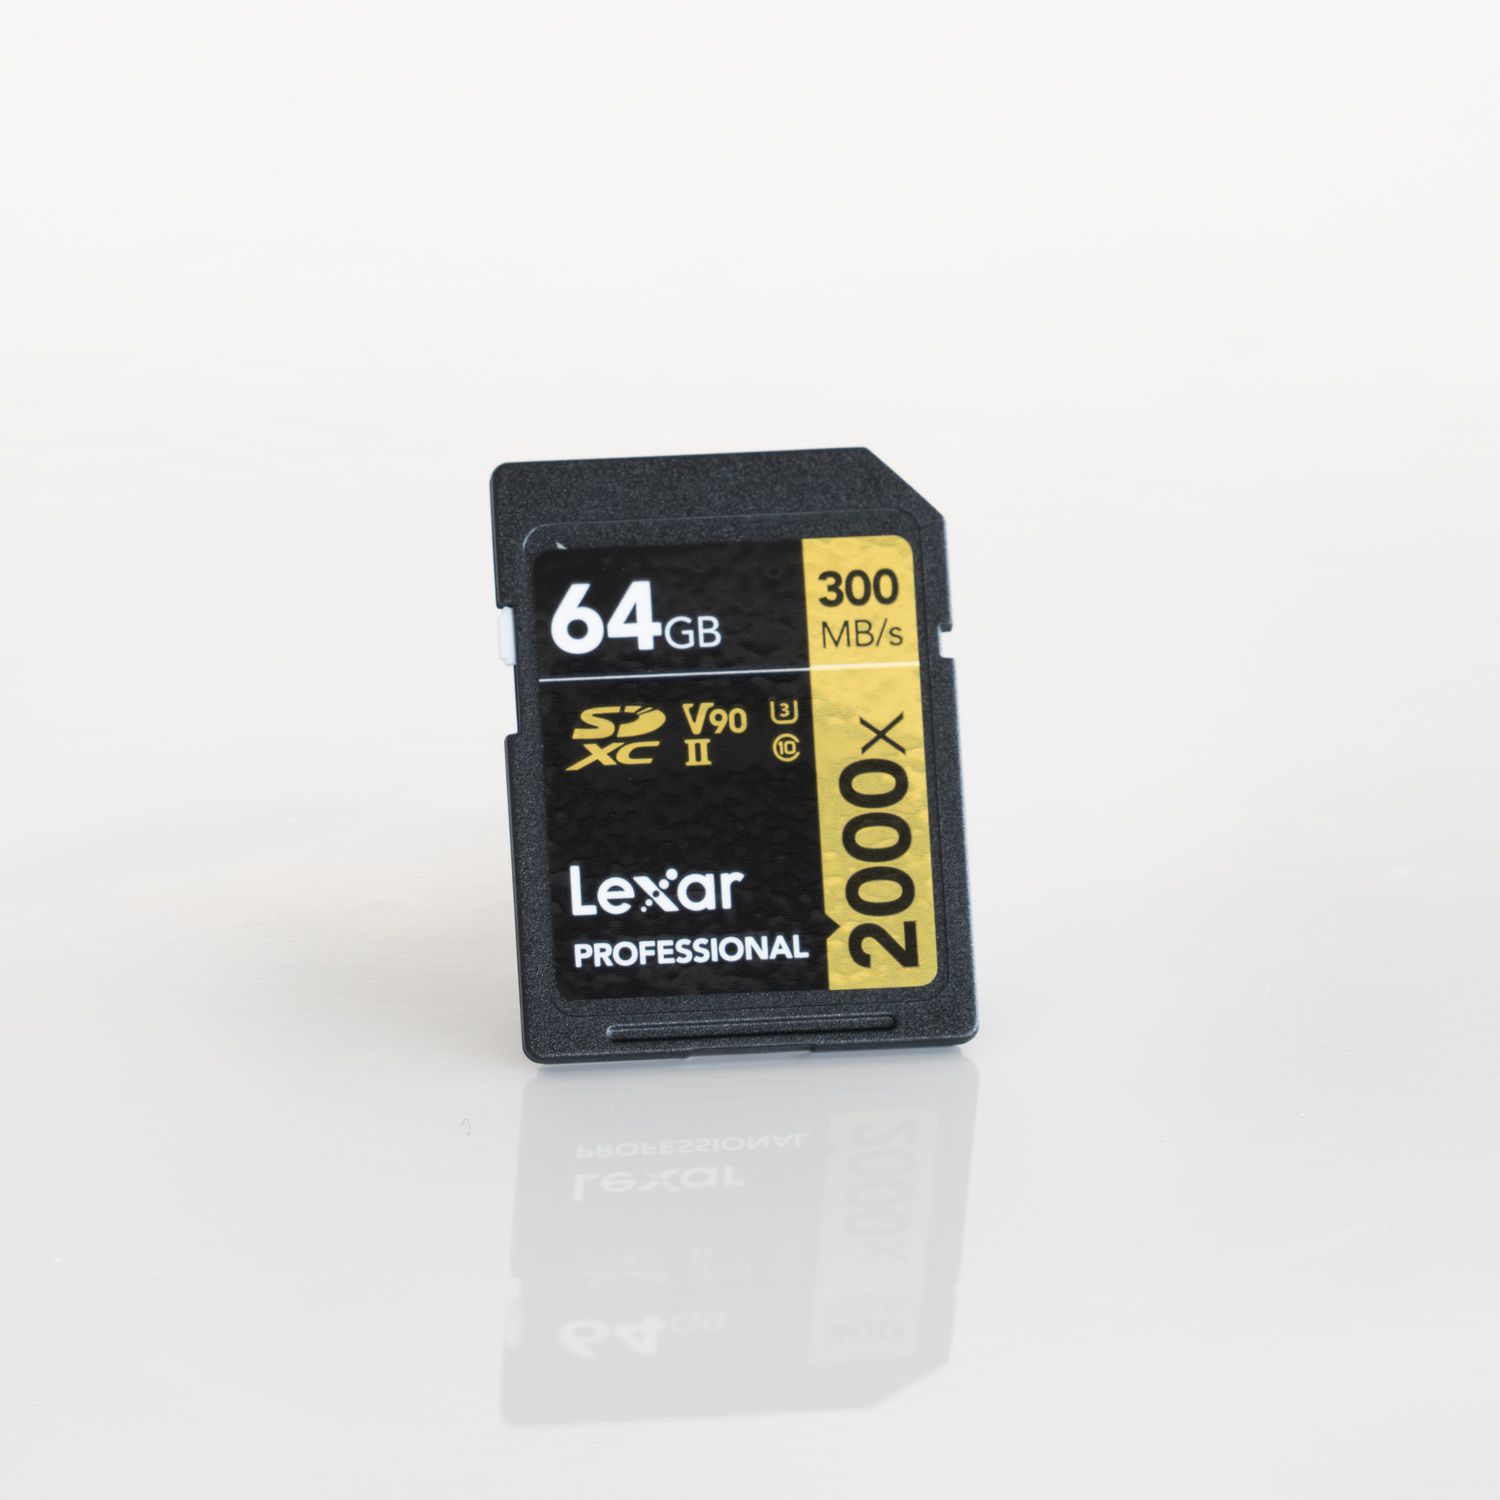 hero SQ Lexar Professional 2000x 64GB SDXC UHS II Card 3 b7392b598d124435ac109091520ad66e